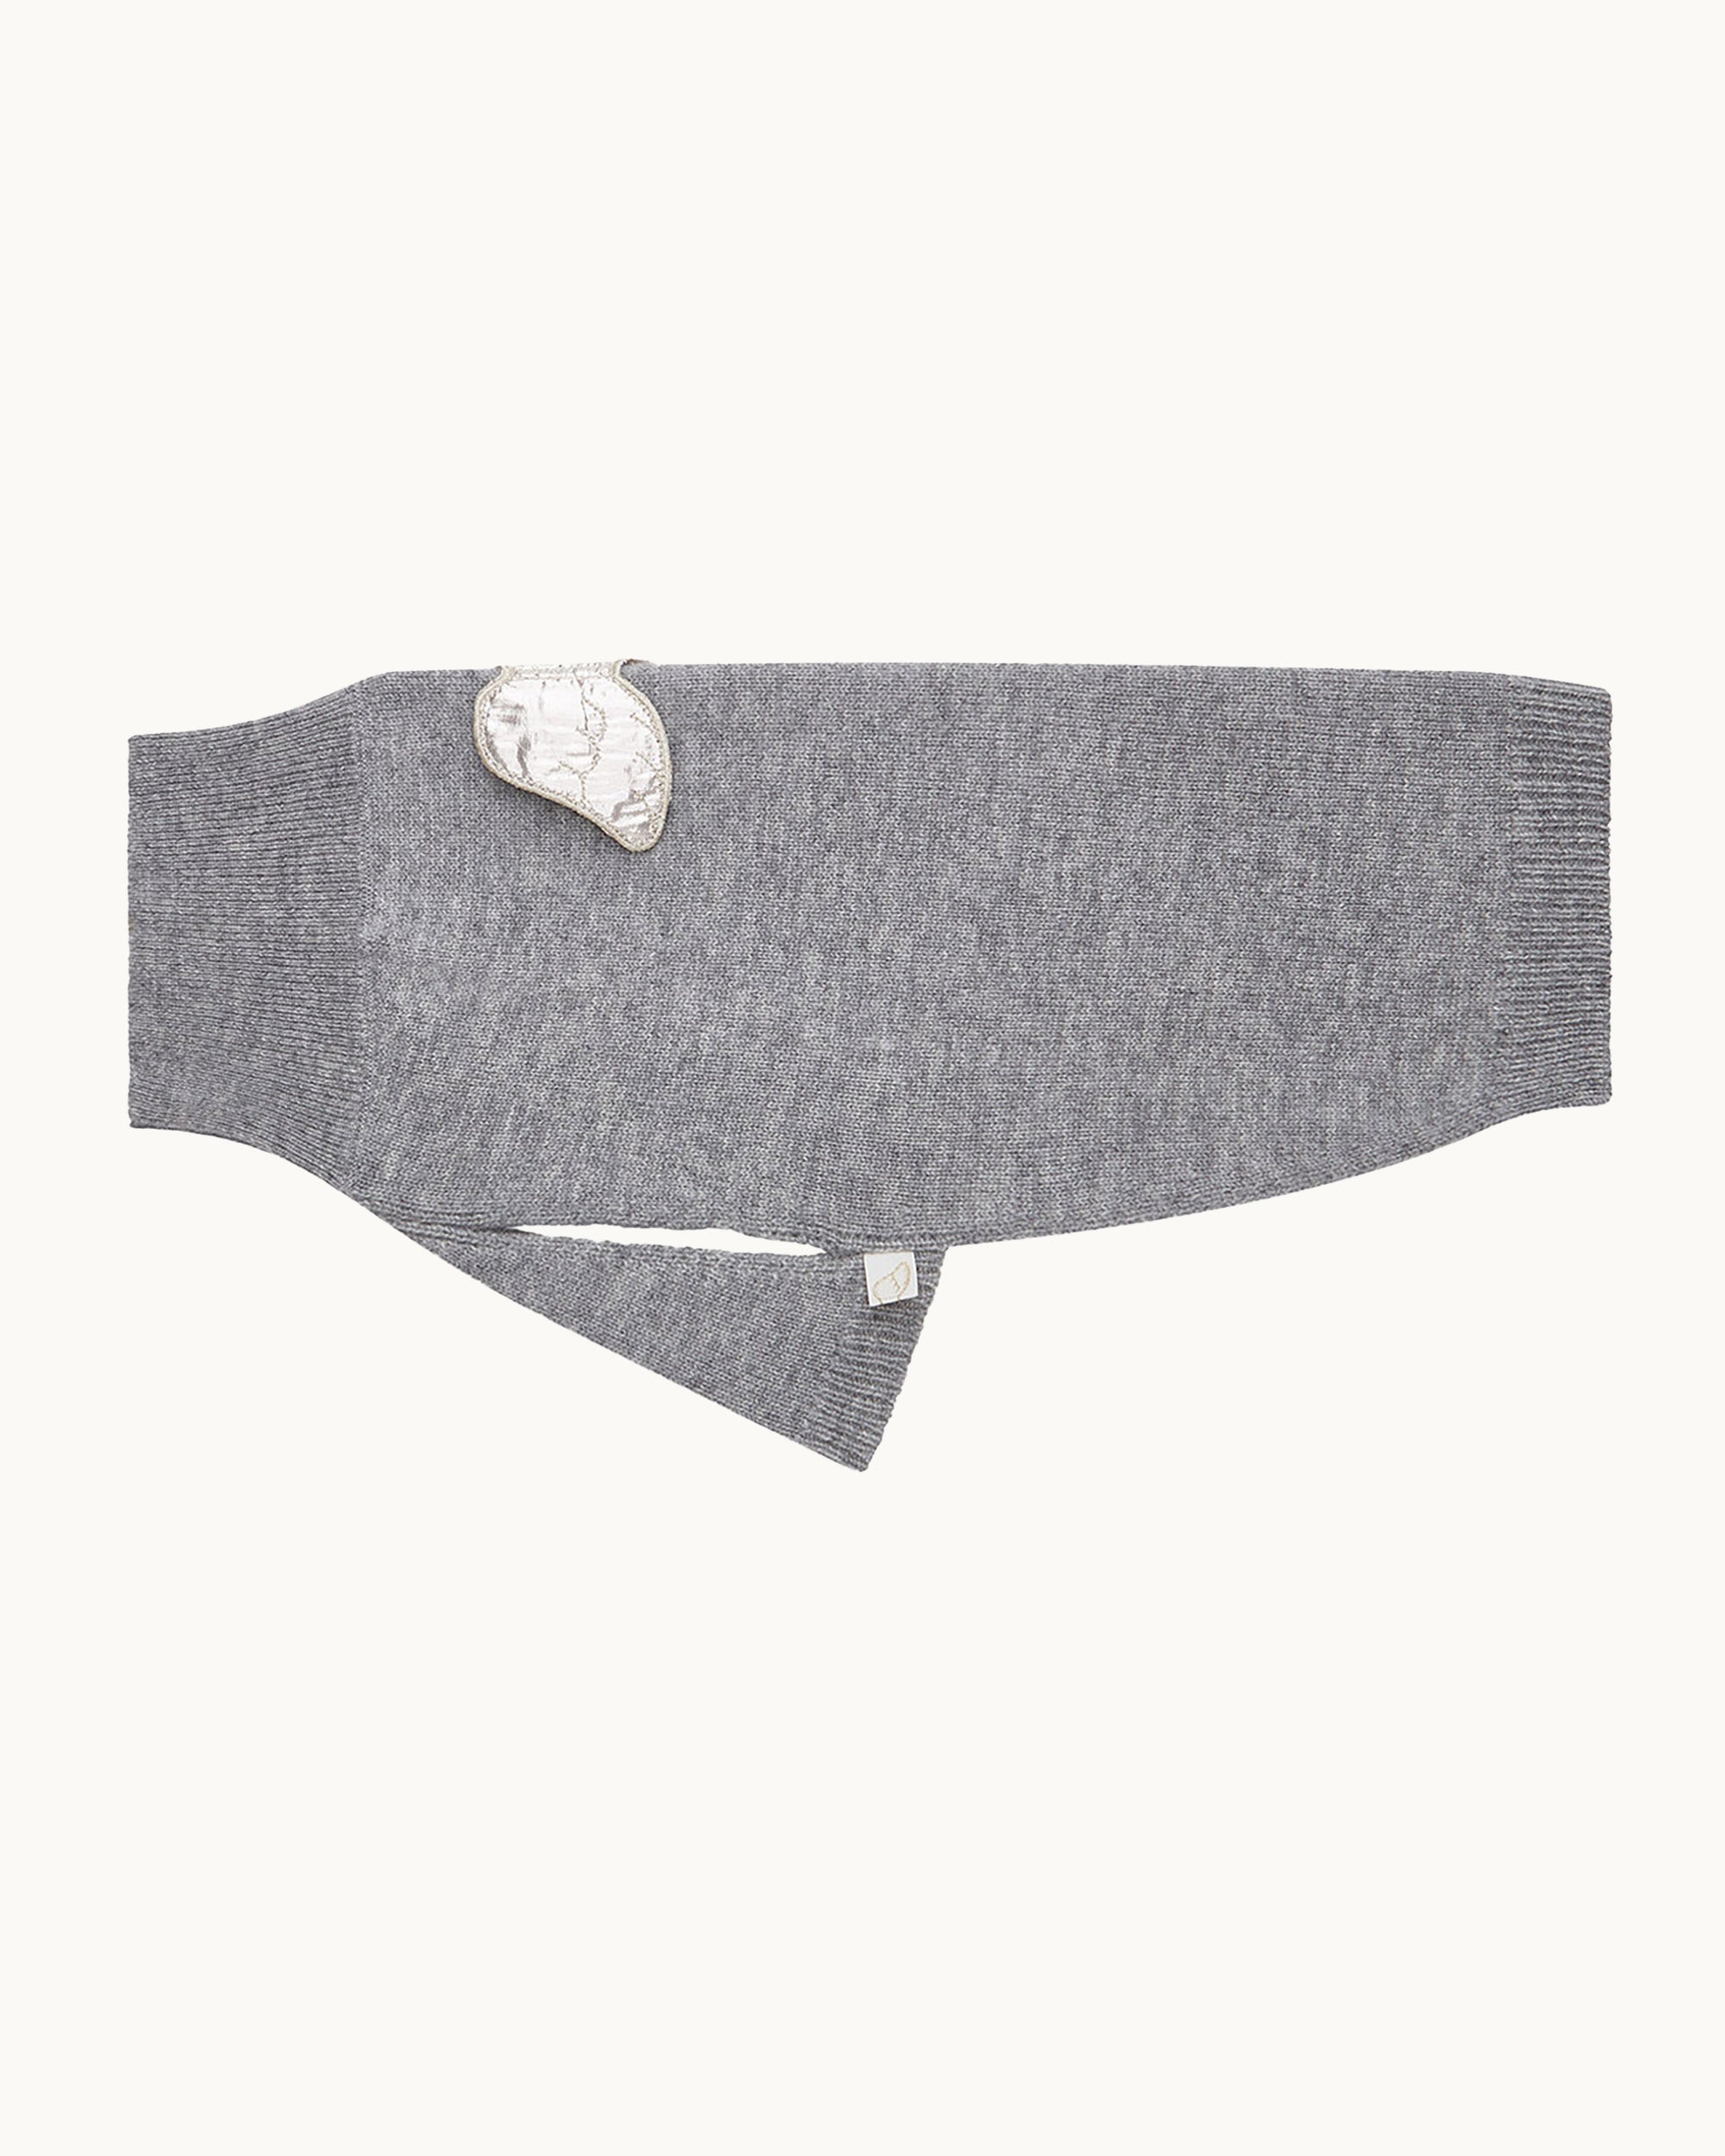 Angel Wing™ Dog Sweater - Grey